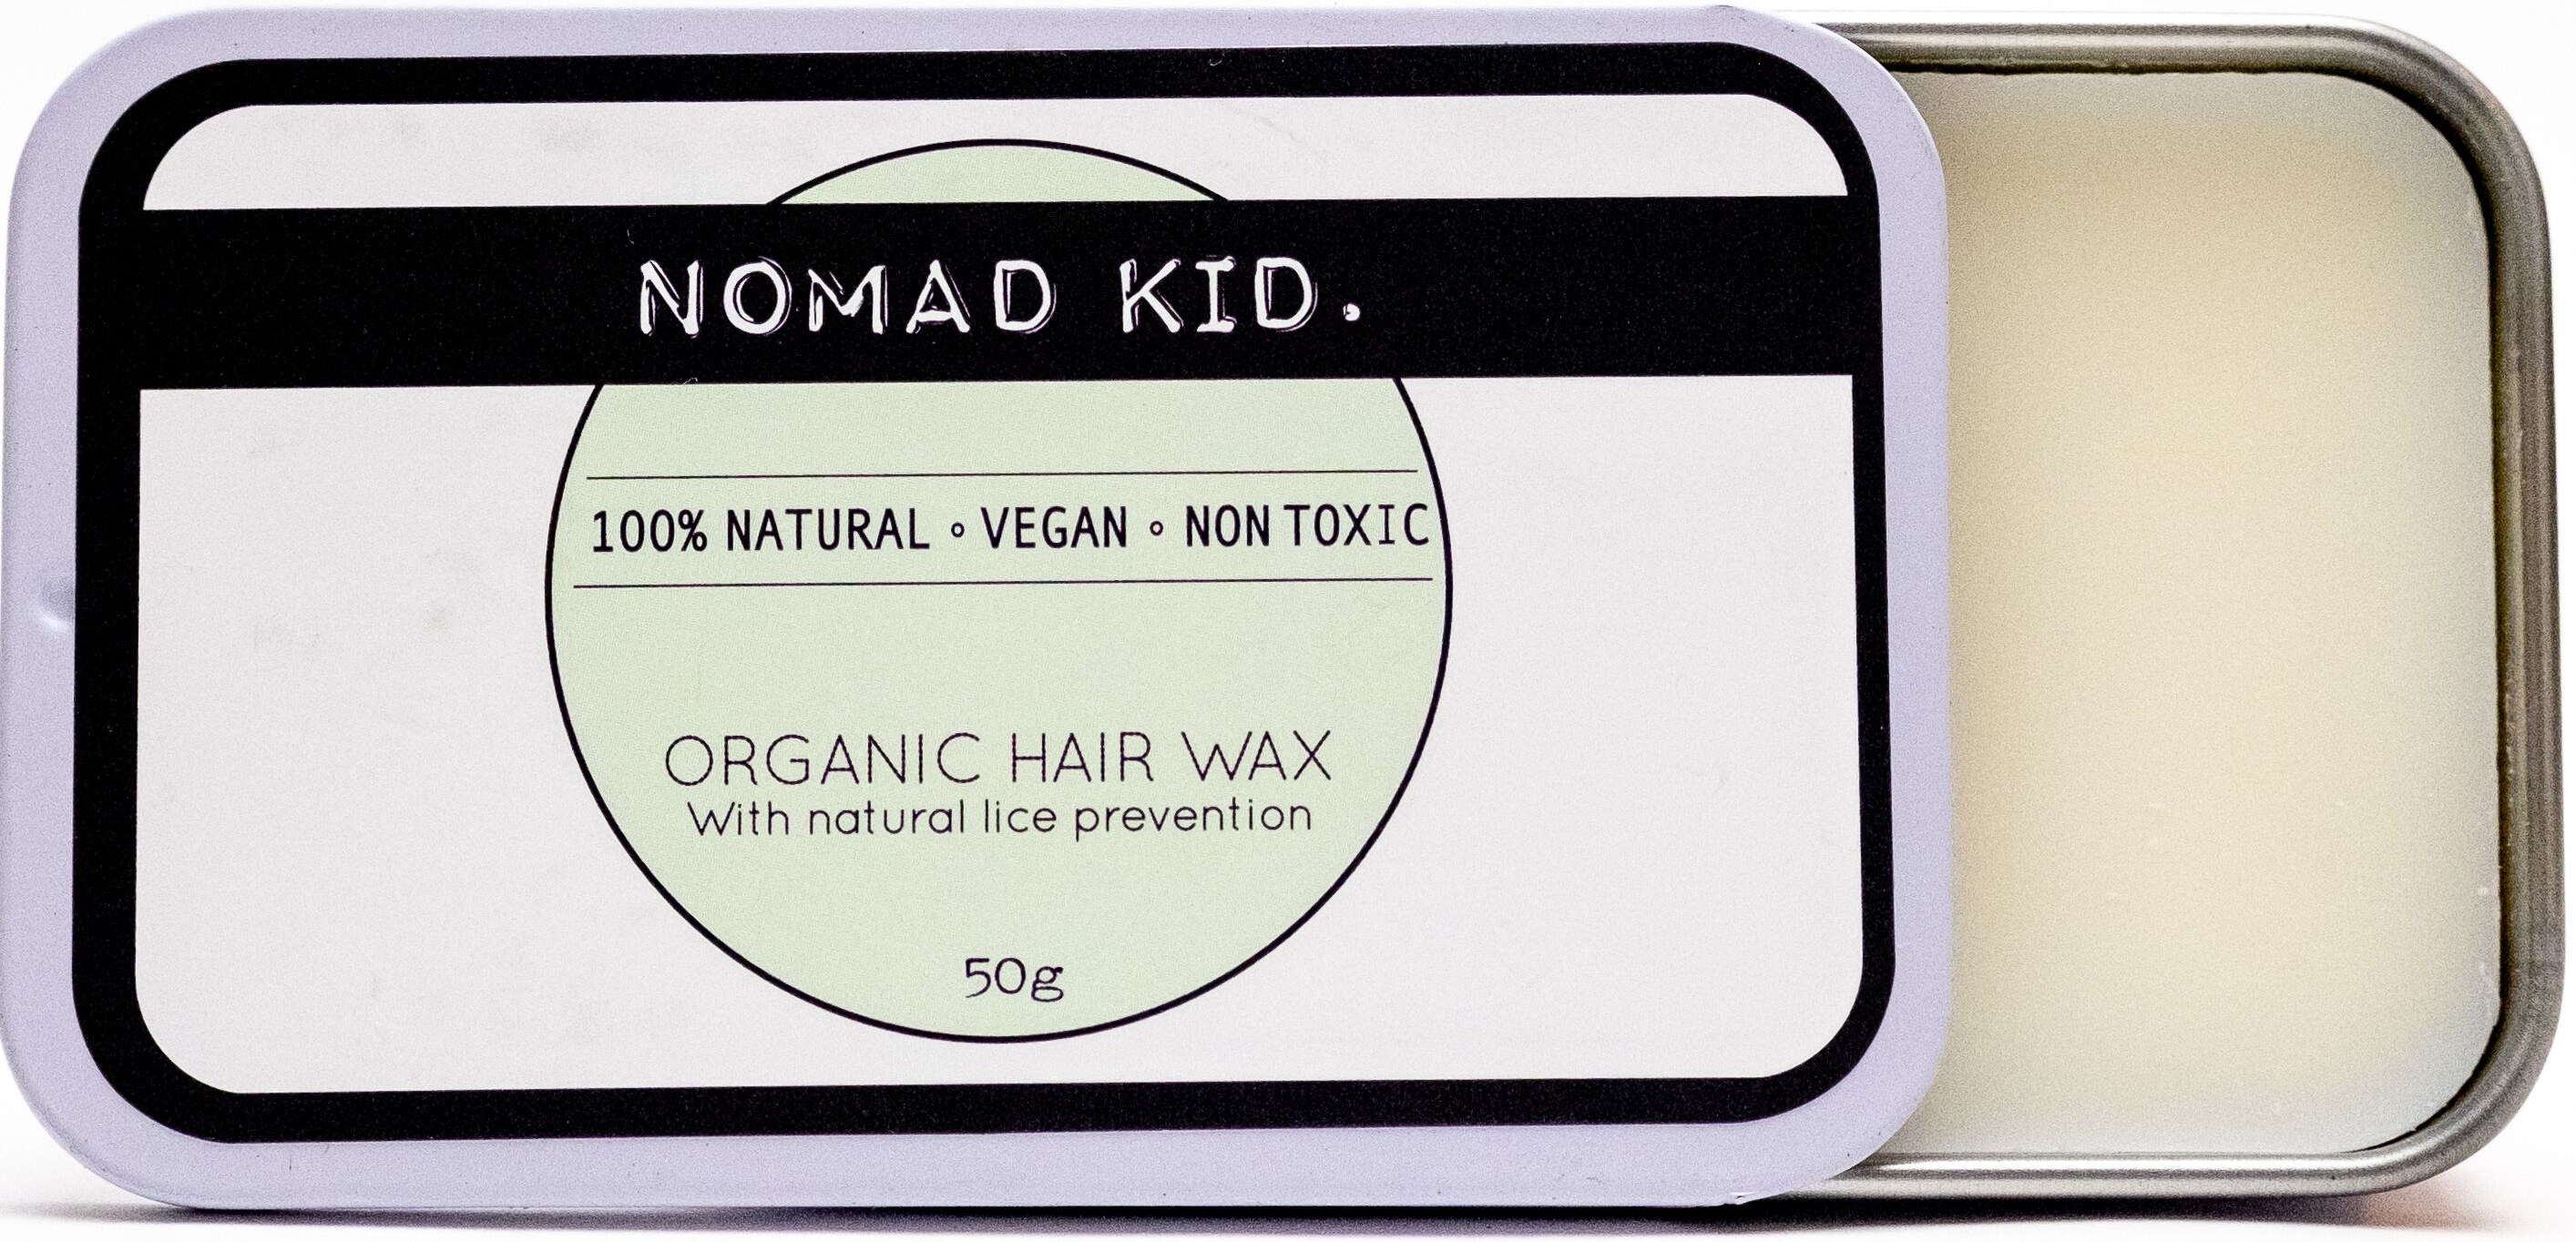 Nomad kid hair wax| Hair styling wax & balm for kids & babies-vegan, non..